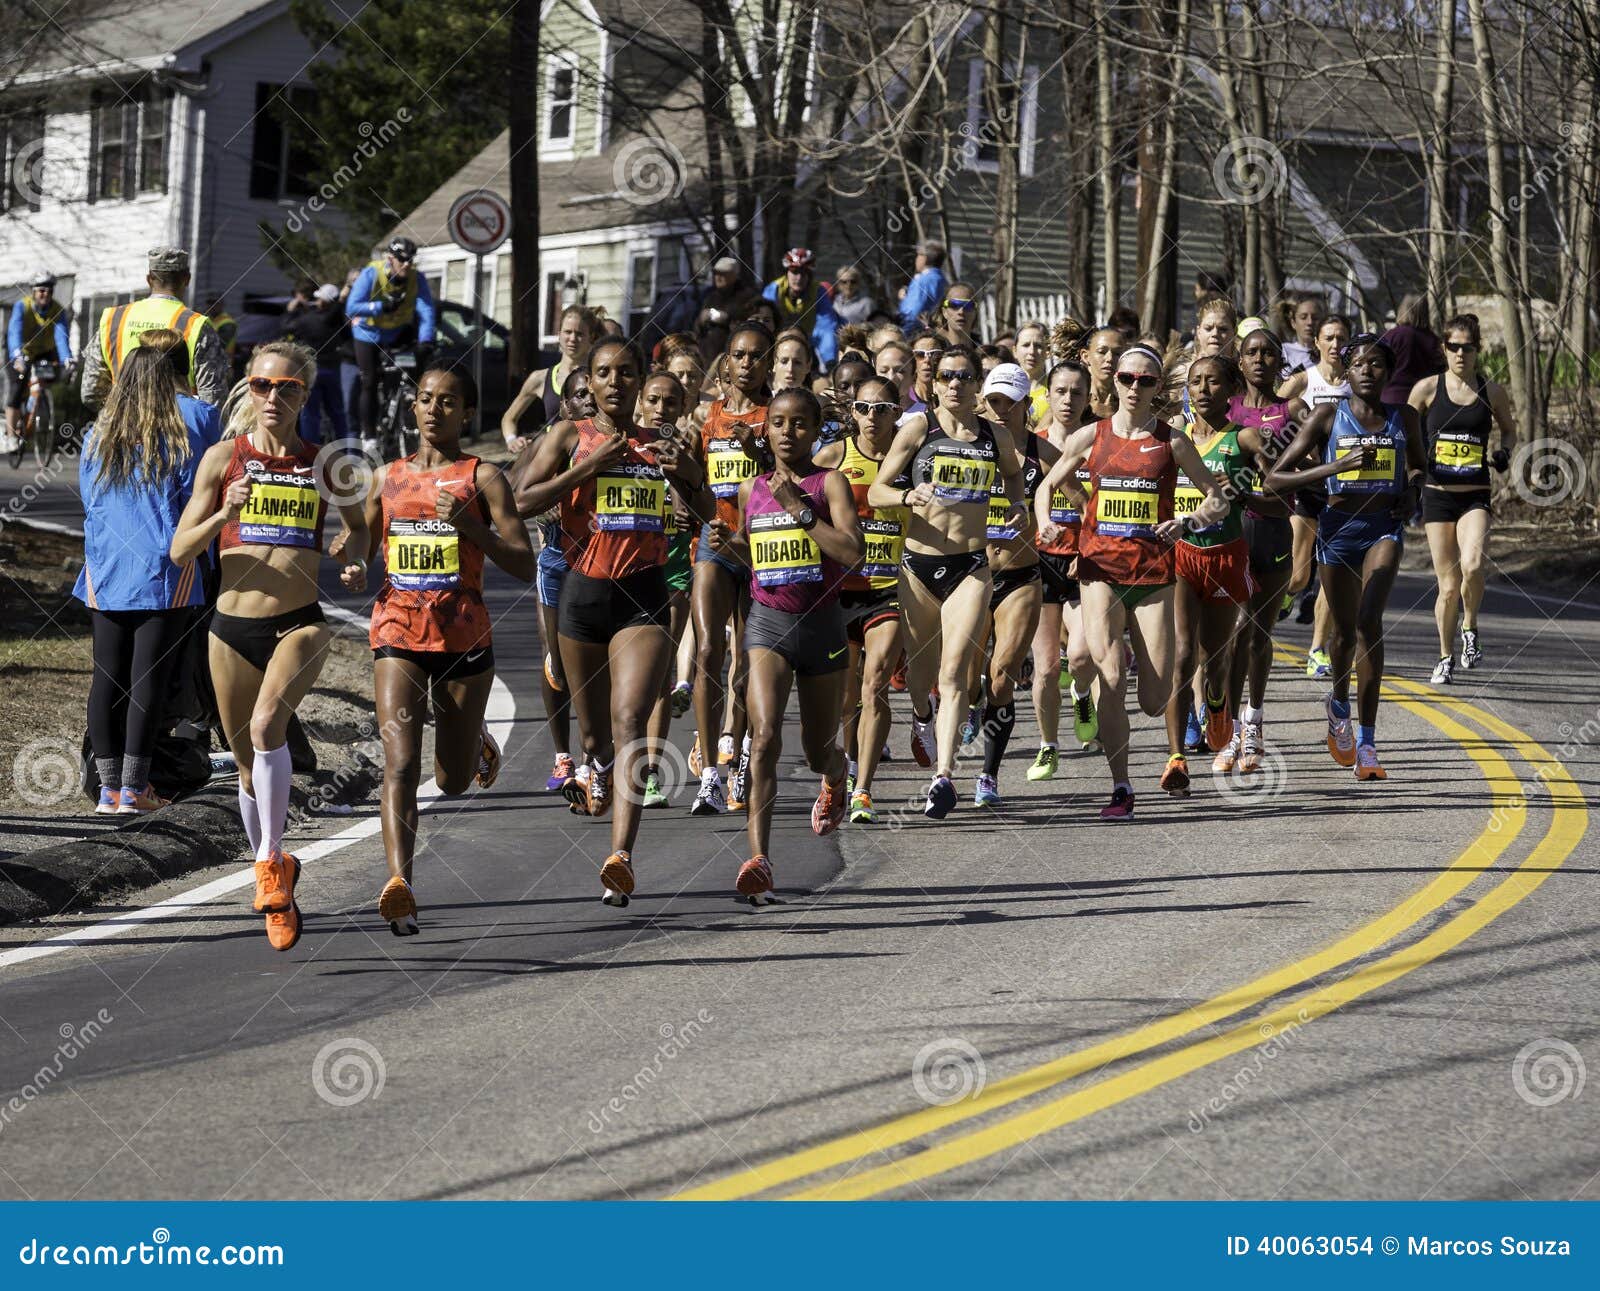 boston-marathon-elite-female-athletes-competing-40063054.jpg